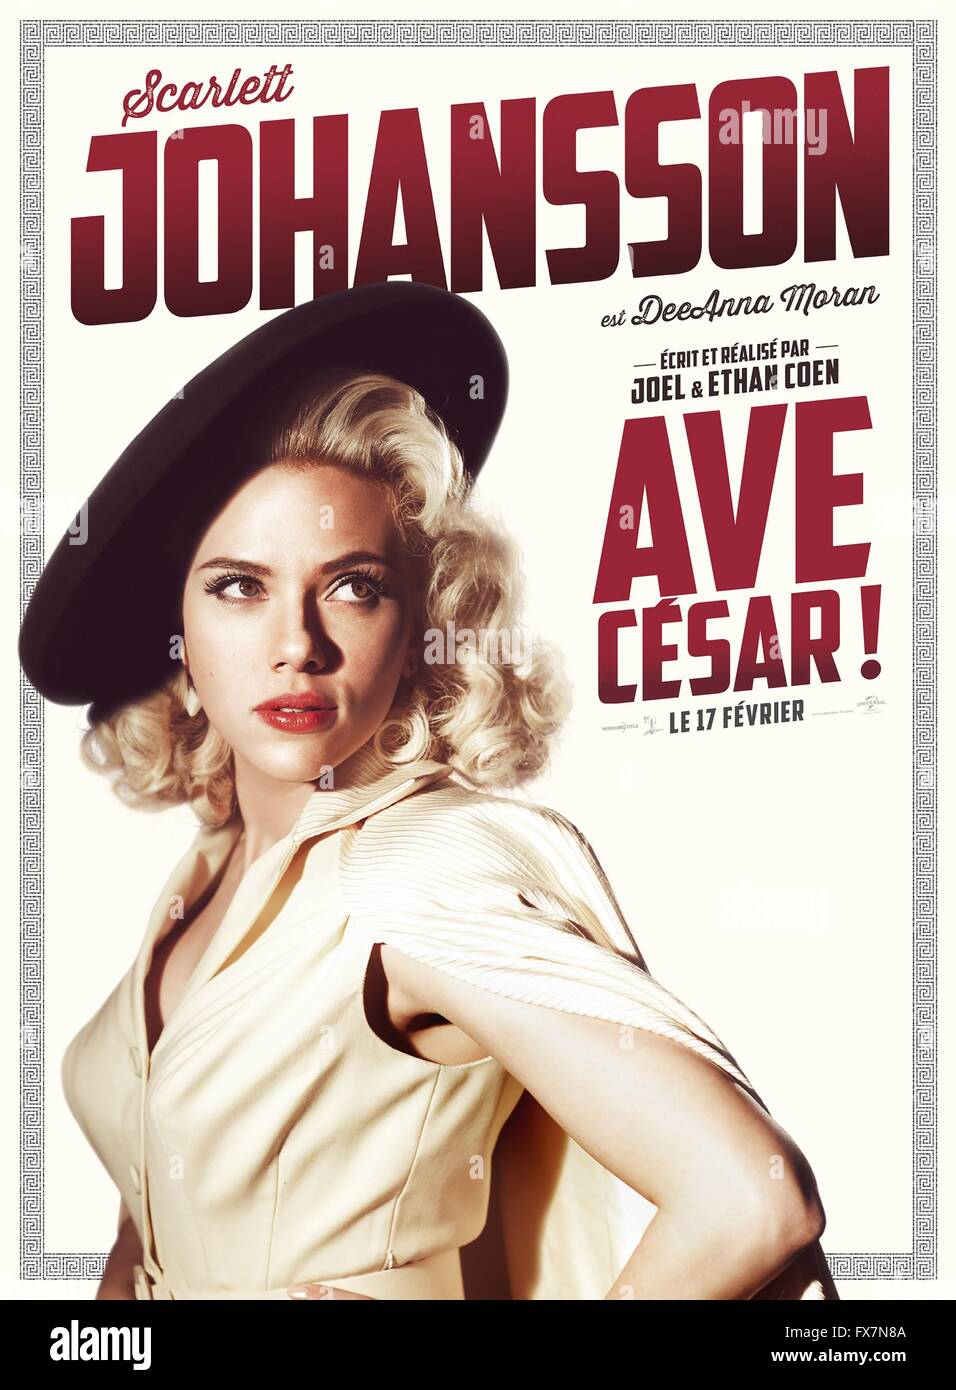 Scarlett Johansson Posters - Posteritati Movie Poster Gallery